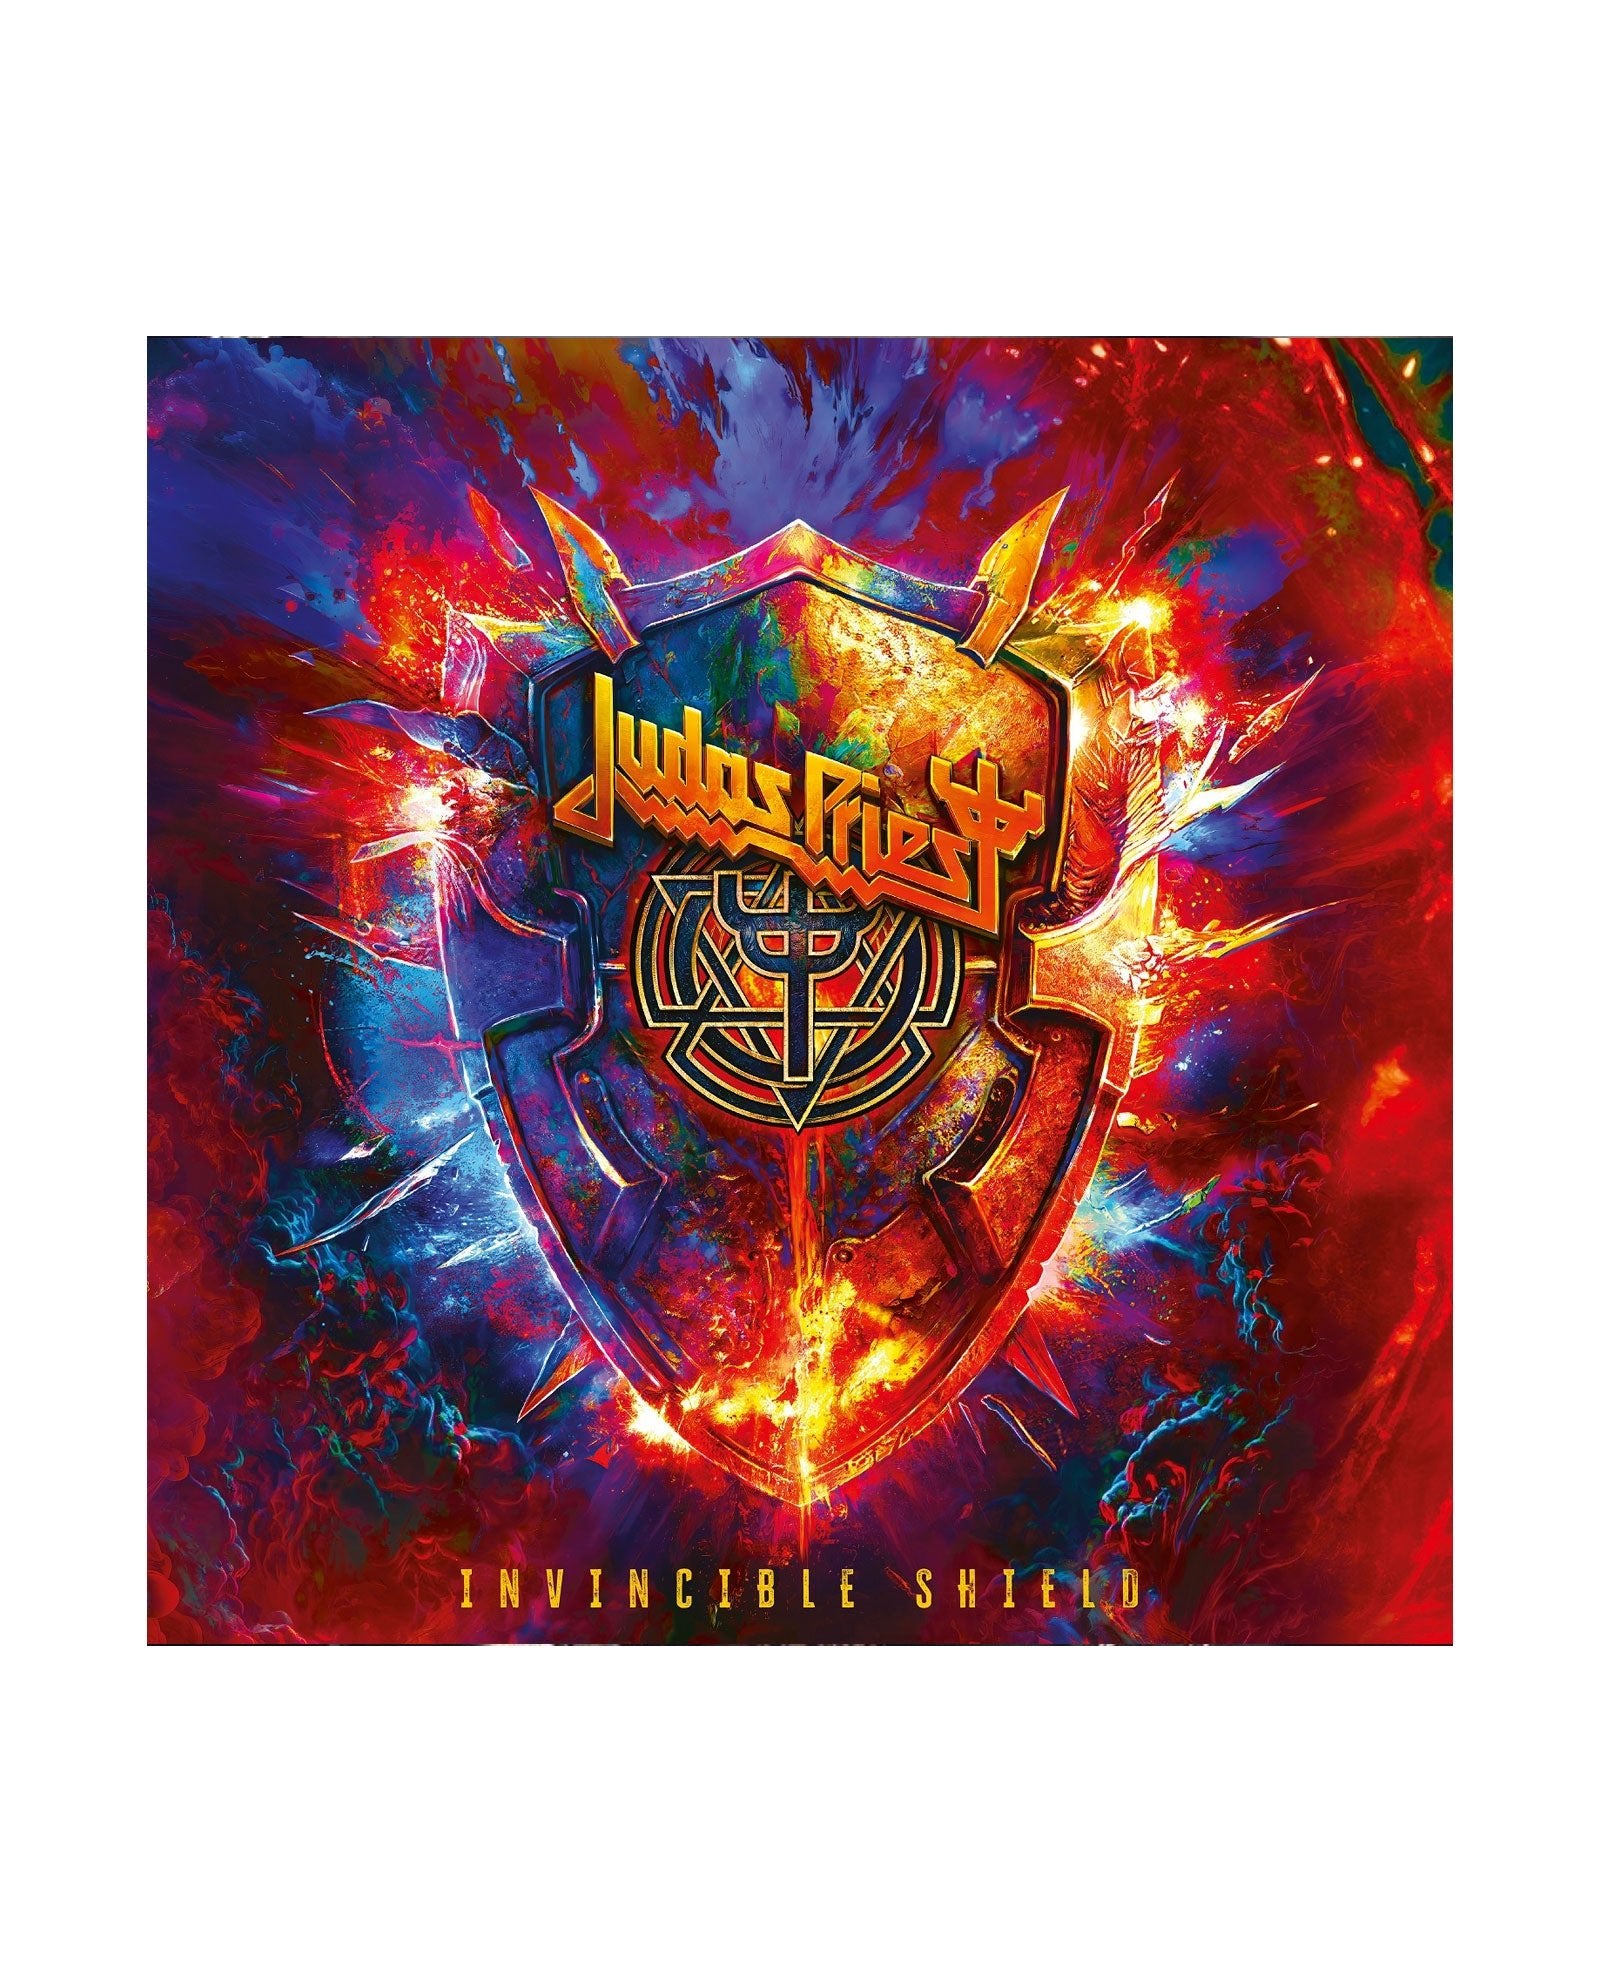 Judas Priest - CD Invincible Shield